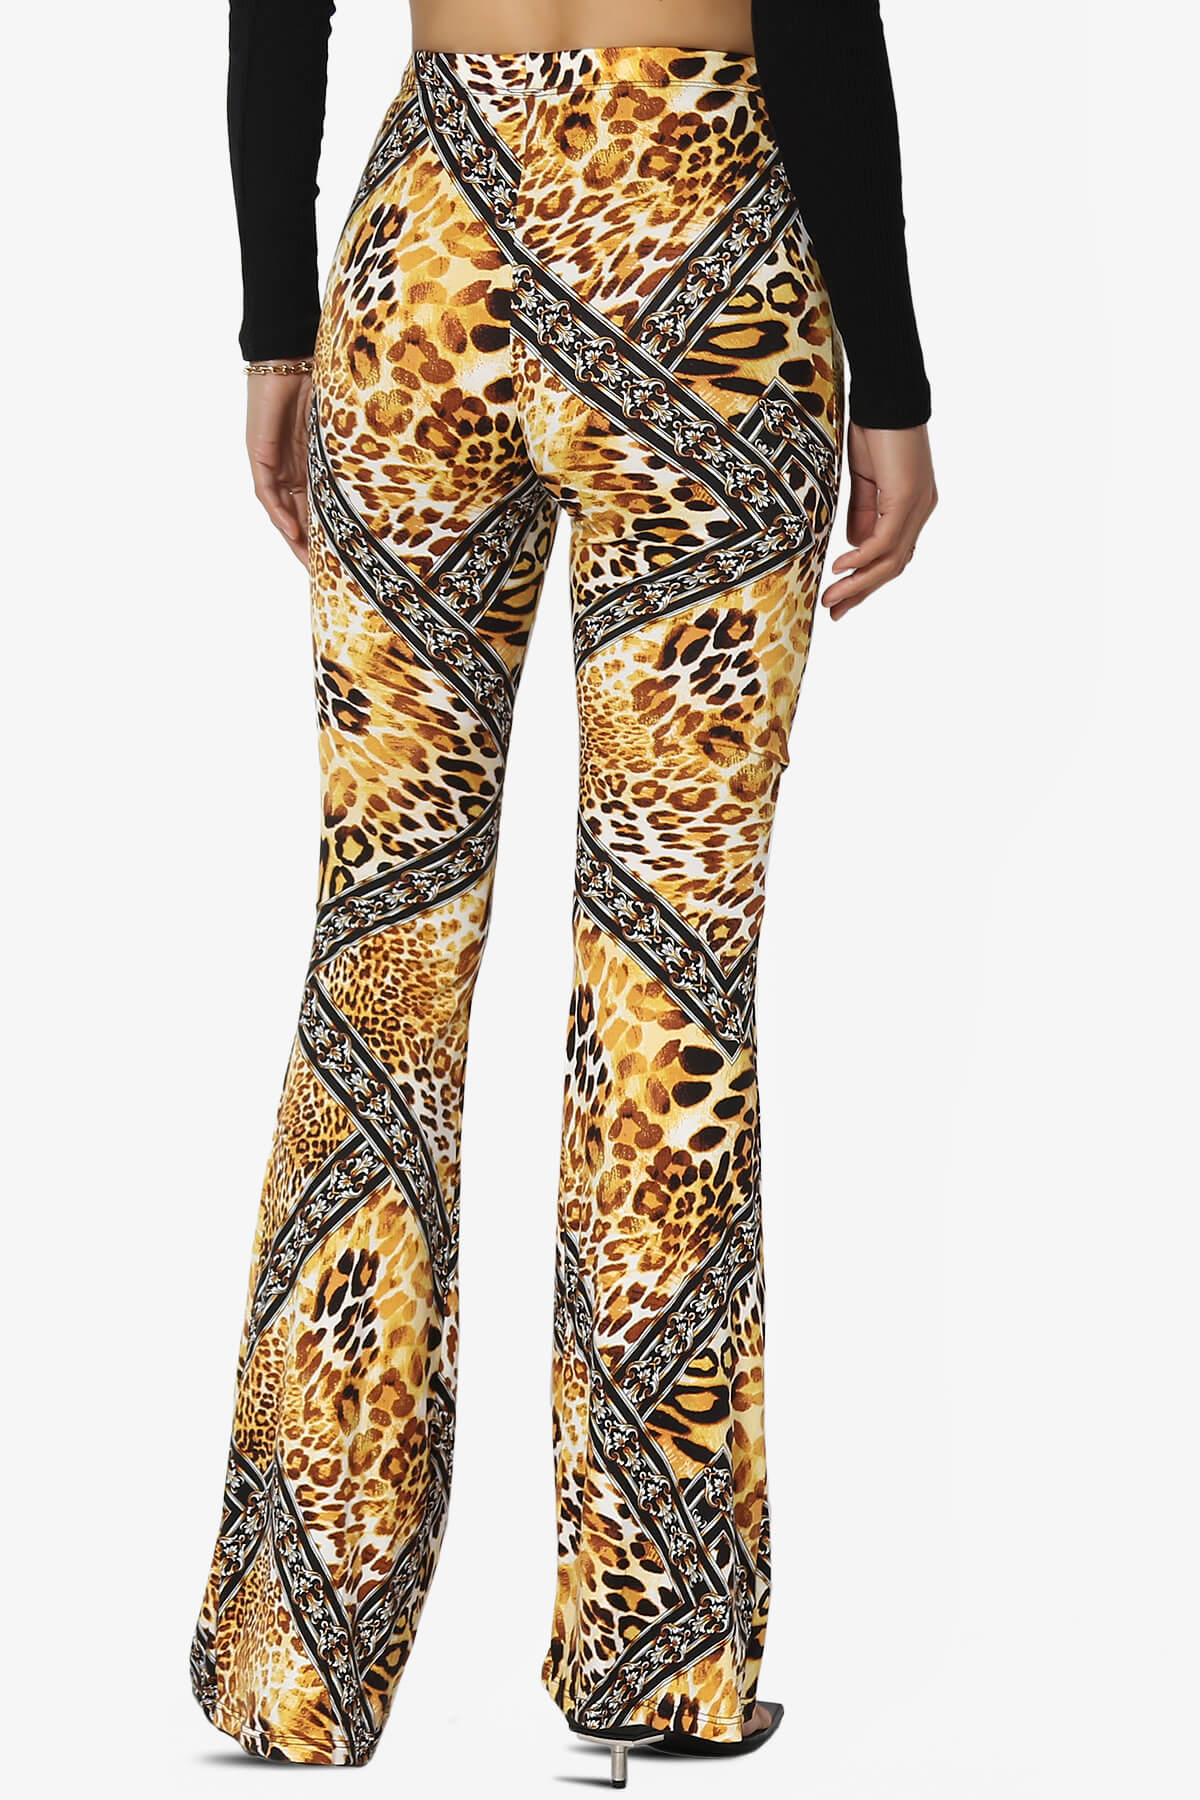 Mumu Cheetah Jersey Flare Pants ANIMAL_2